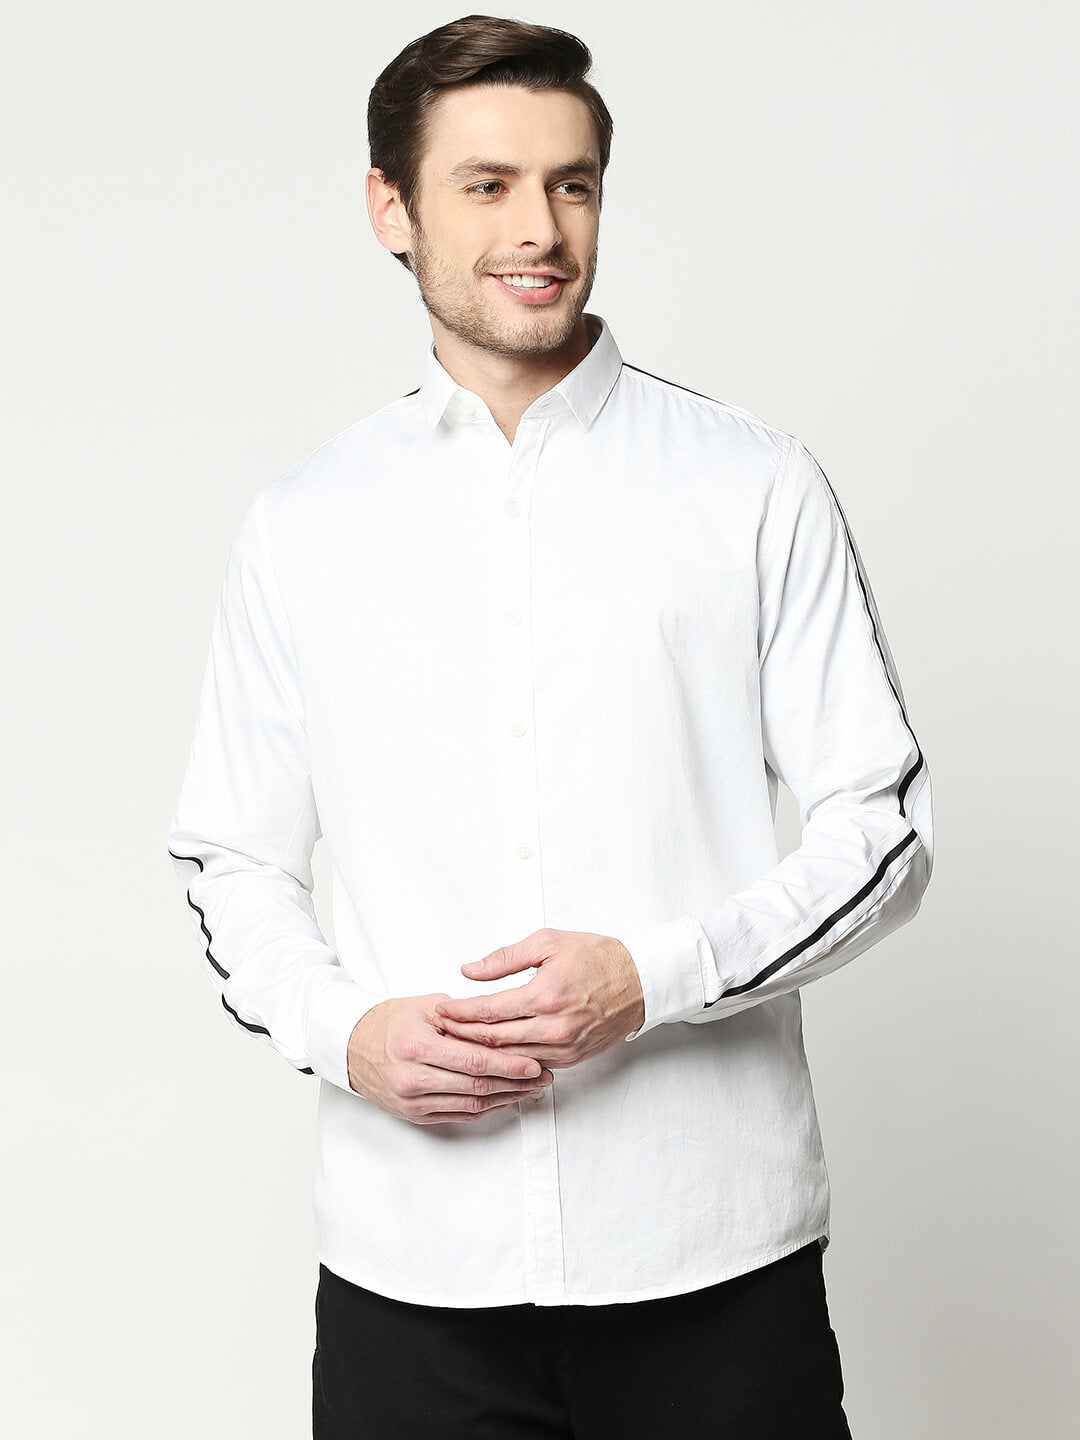 The Manaca Men Partywear Shirt-White & Black Stripe